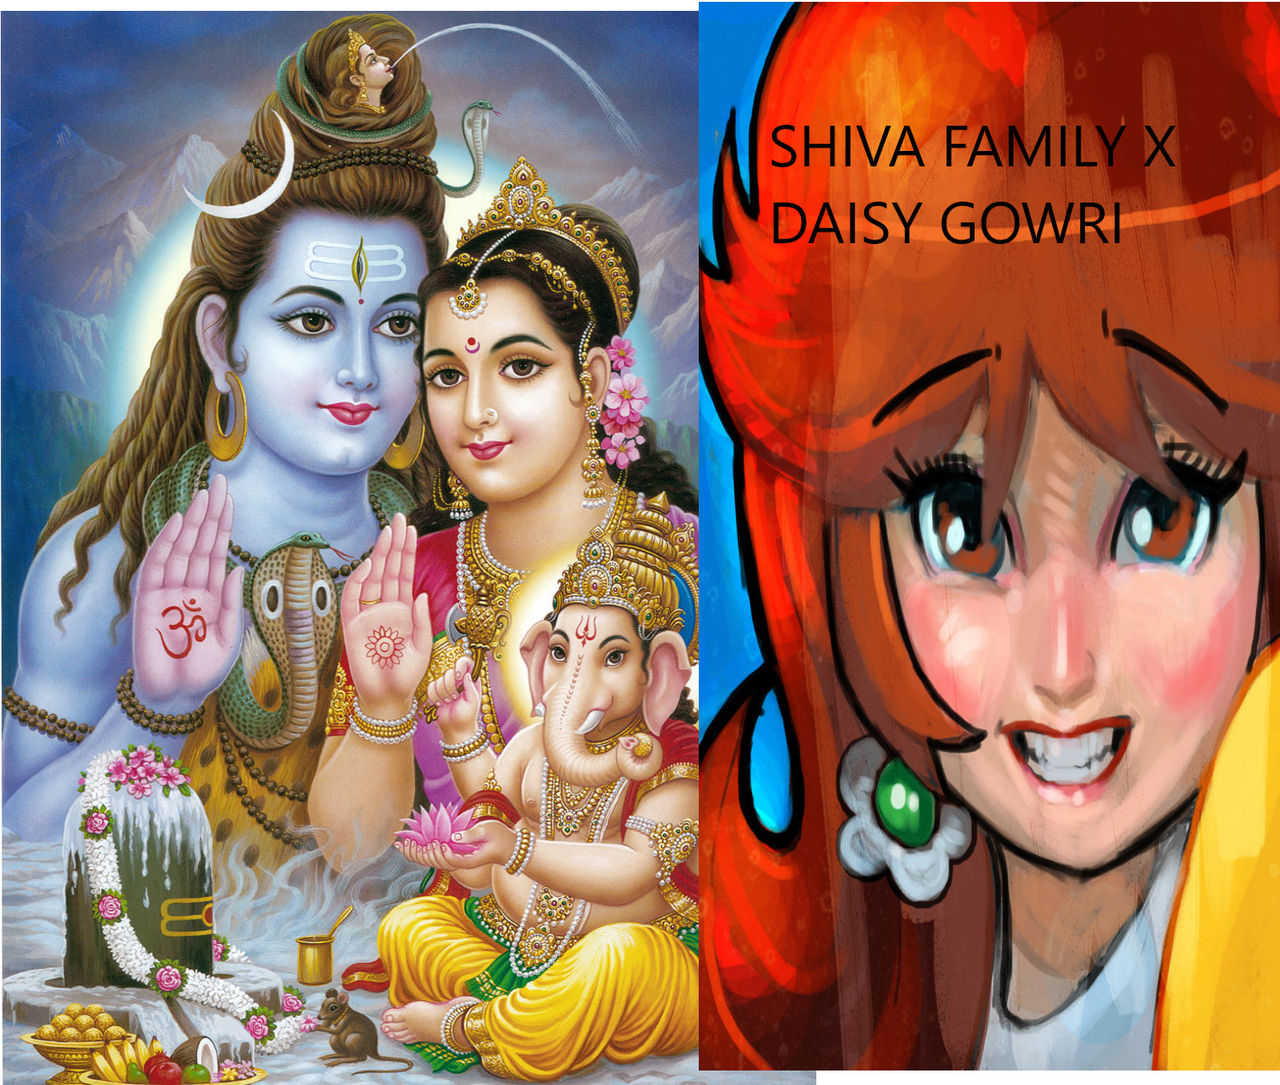 Lord Shiva's Family X Daisy Gowri by bhargavstudent on DeviantArt